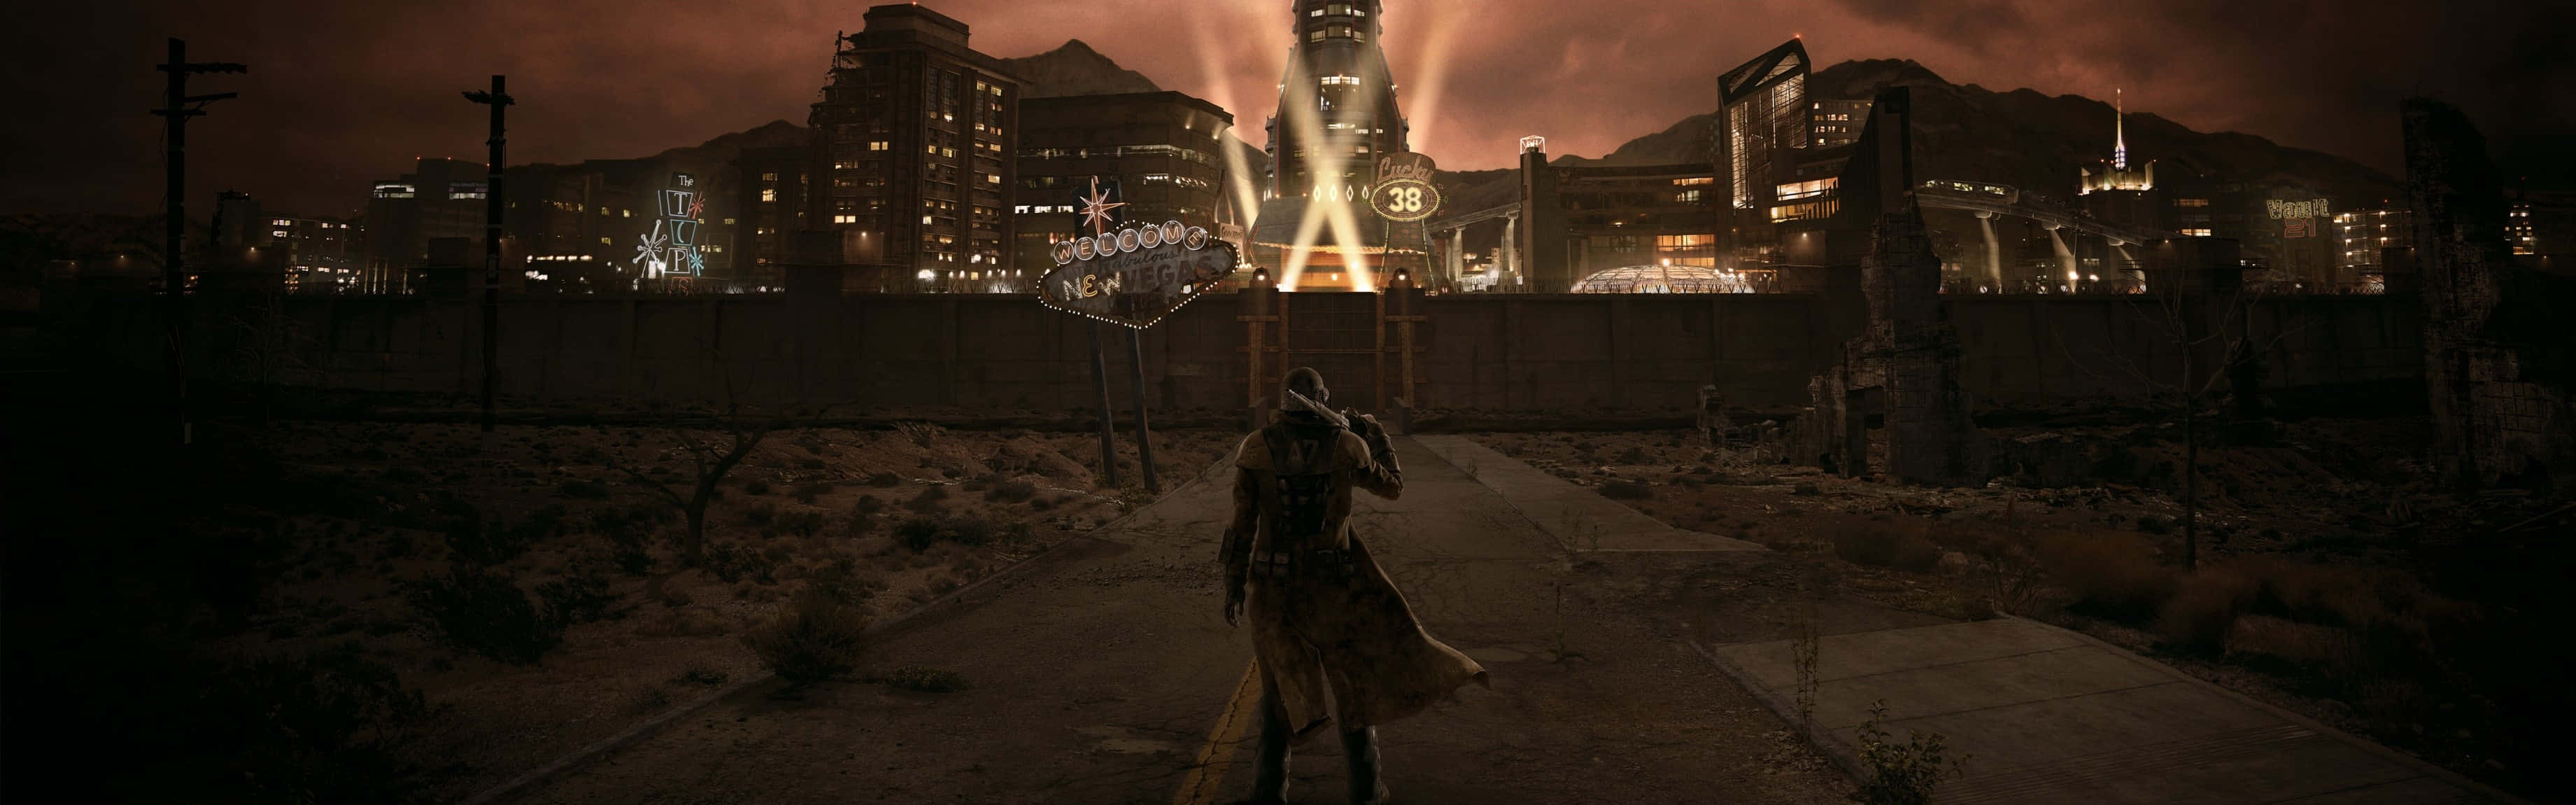 Erkundedas Ödland Von Fallout: New Vegas Wallpaper